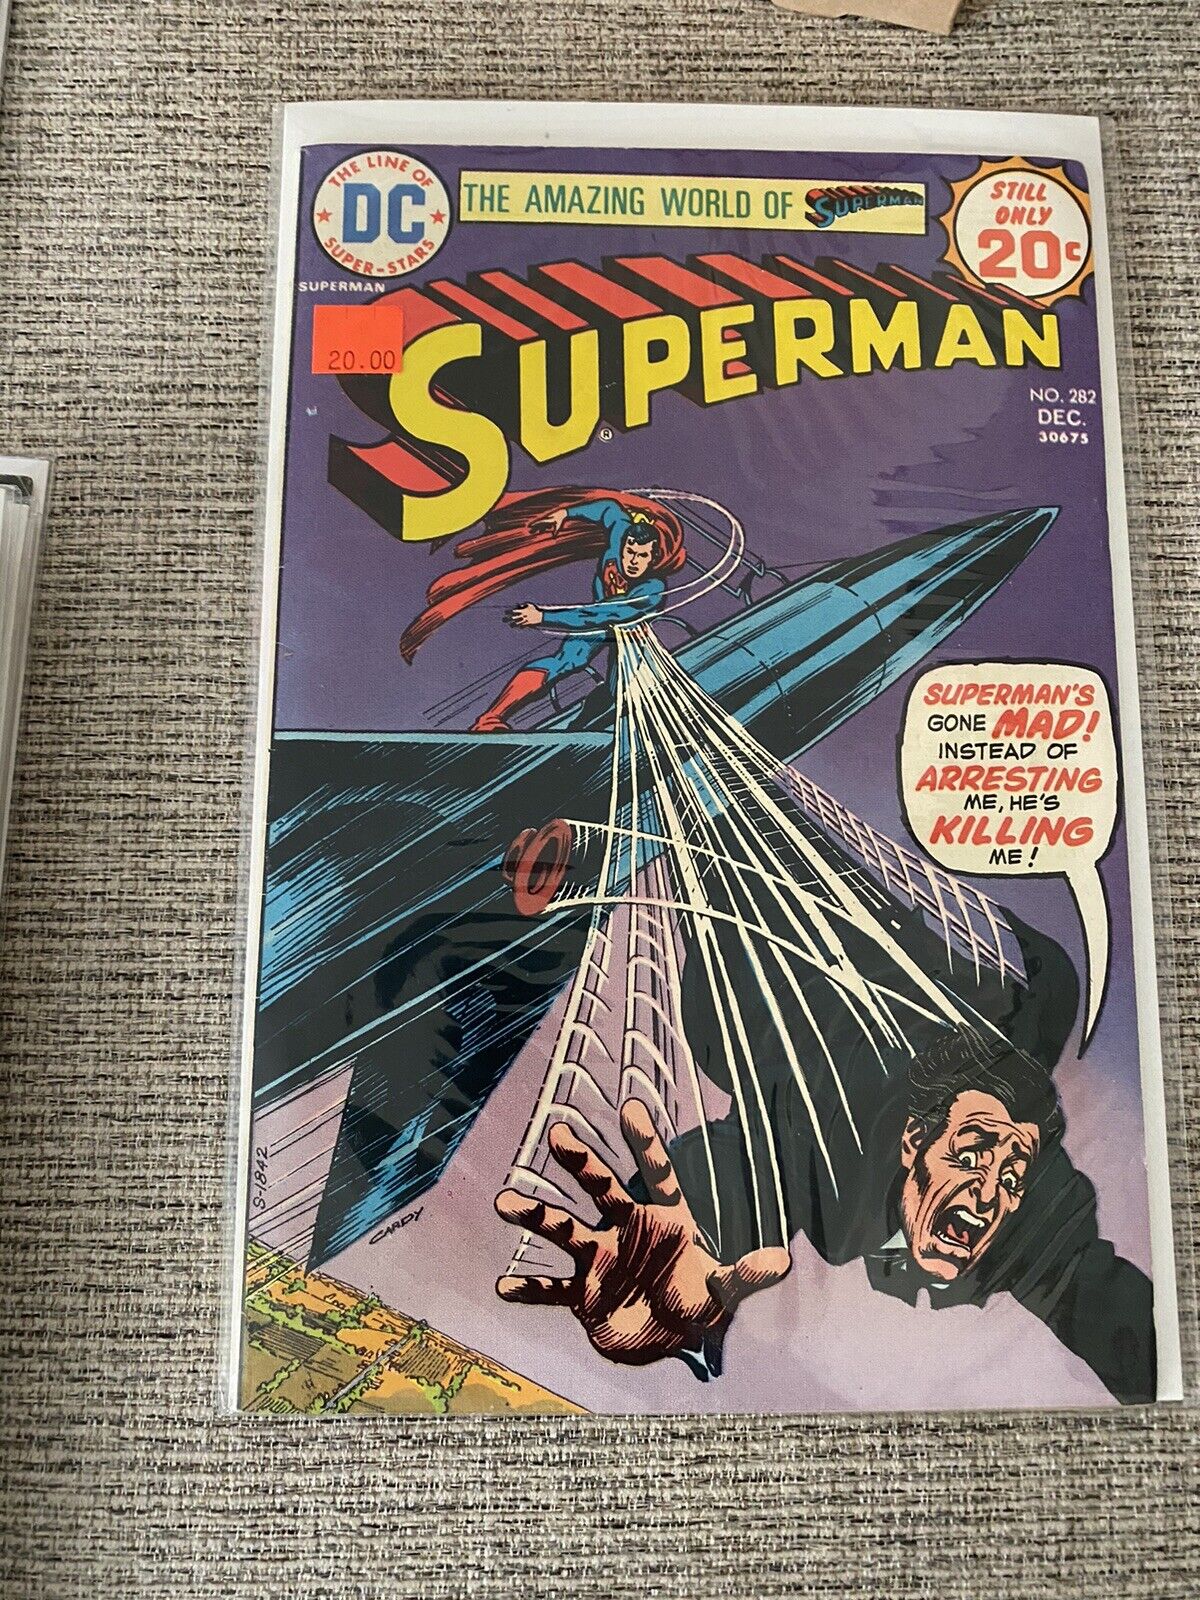 The Amazing World of Superman #282 DC Comic Book 1974 HIGH GRADE